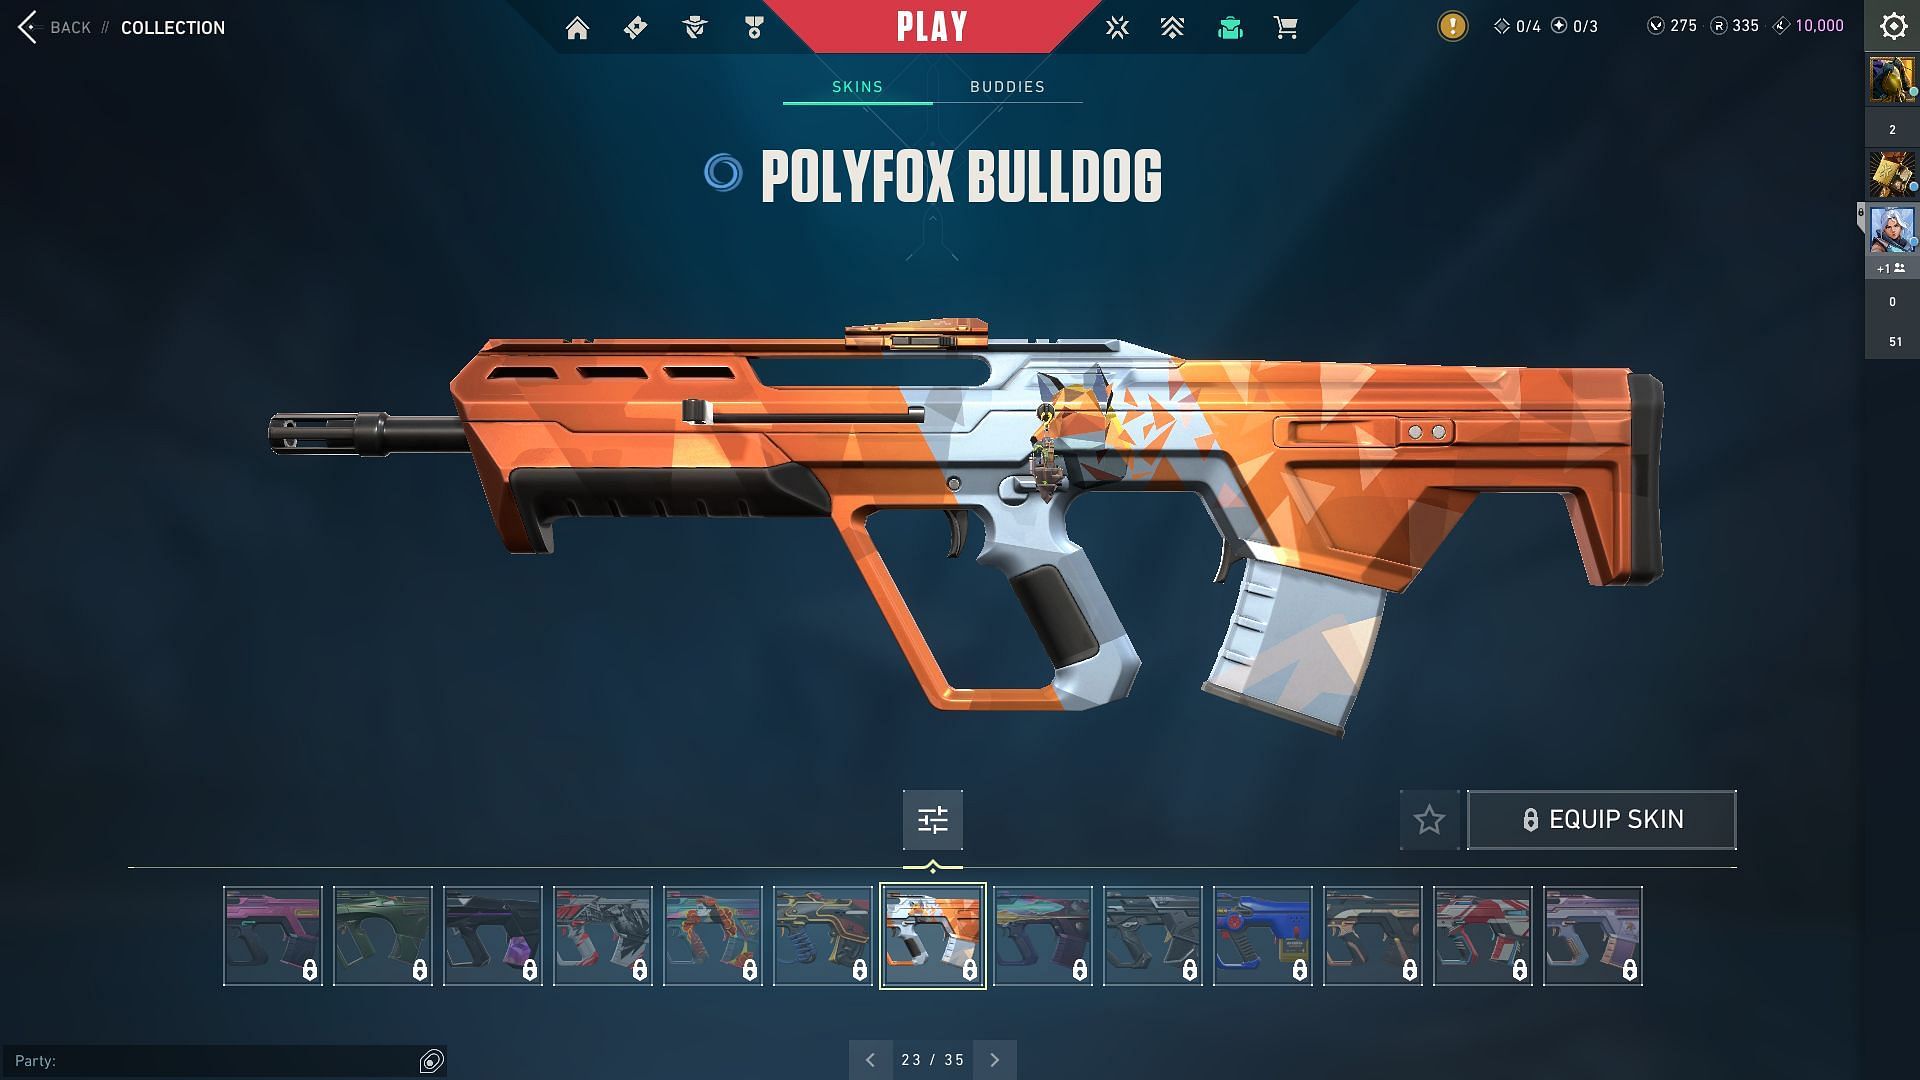 Polyfox Bulldog (Image via Sportskeeda and Riot Games)